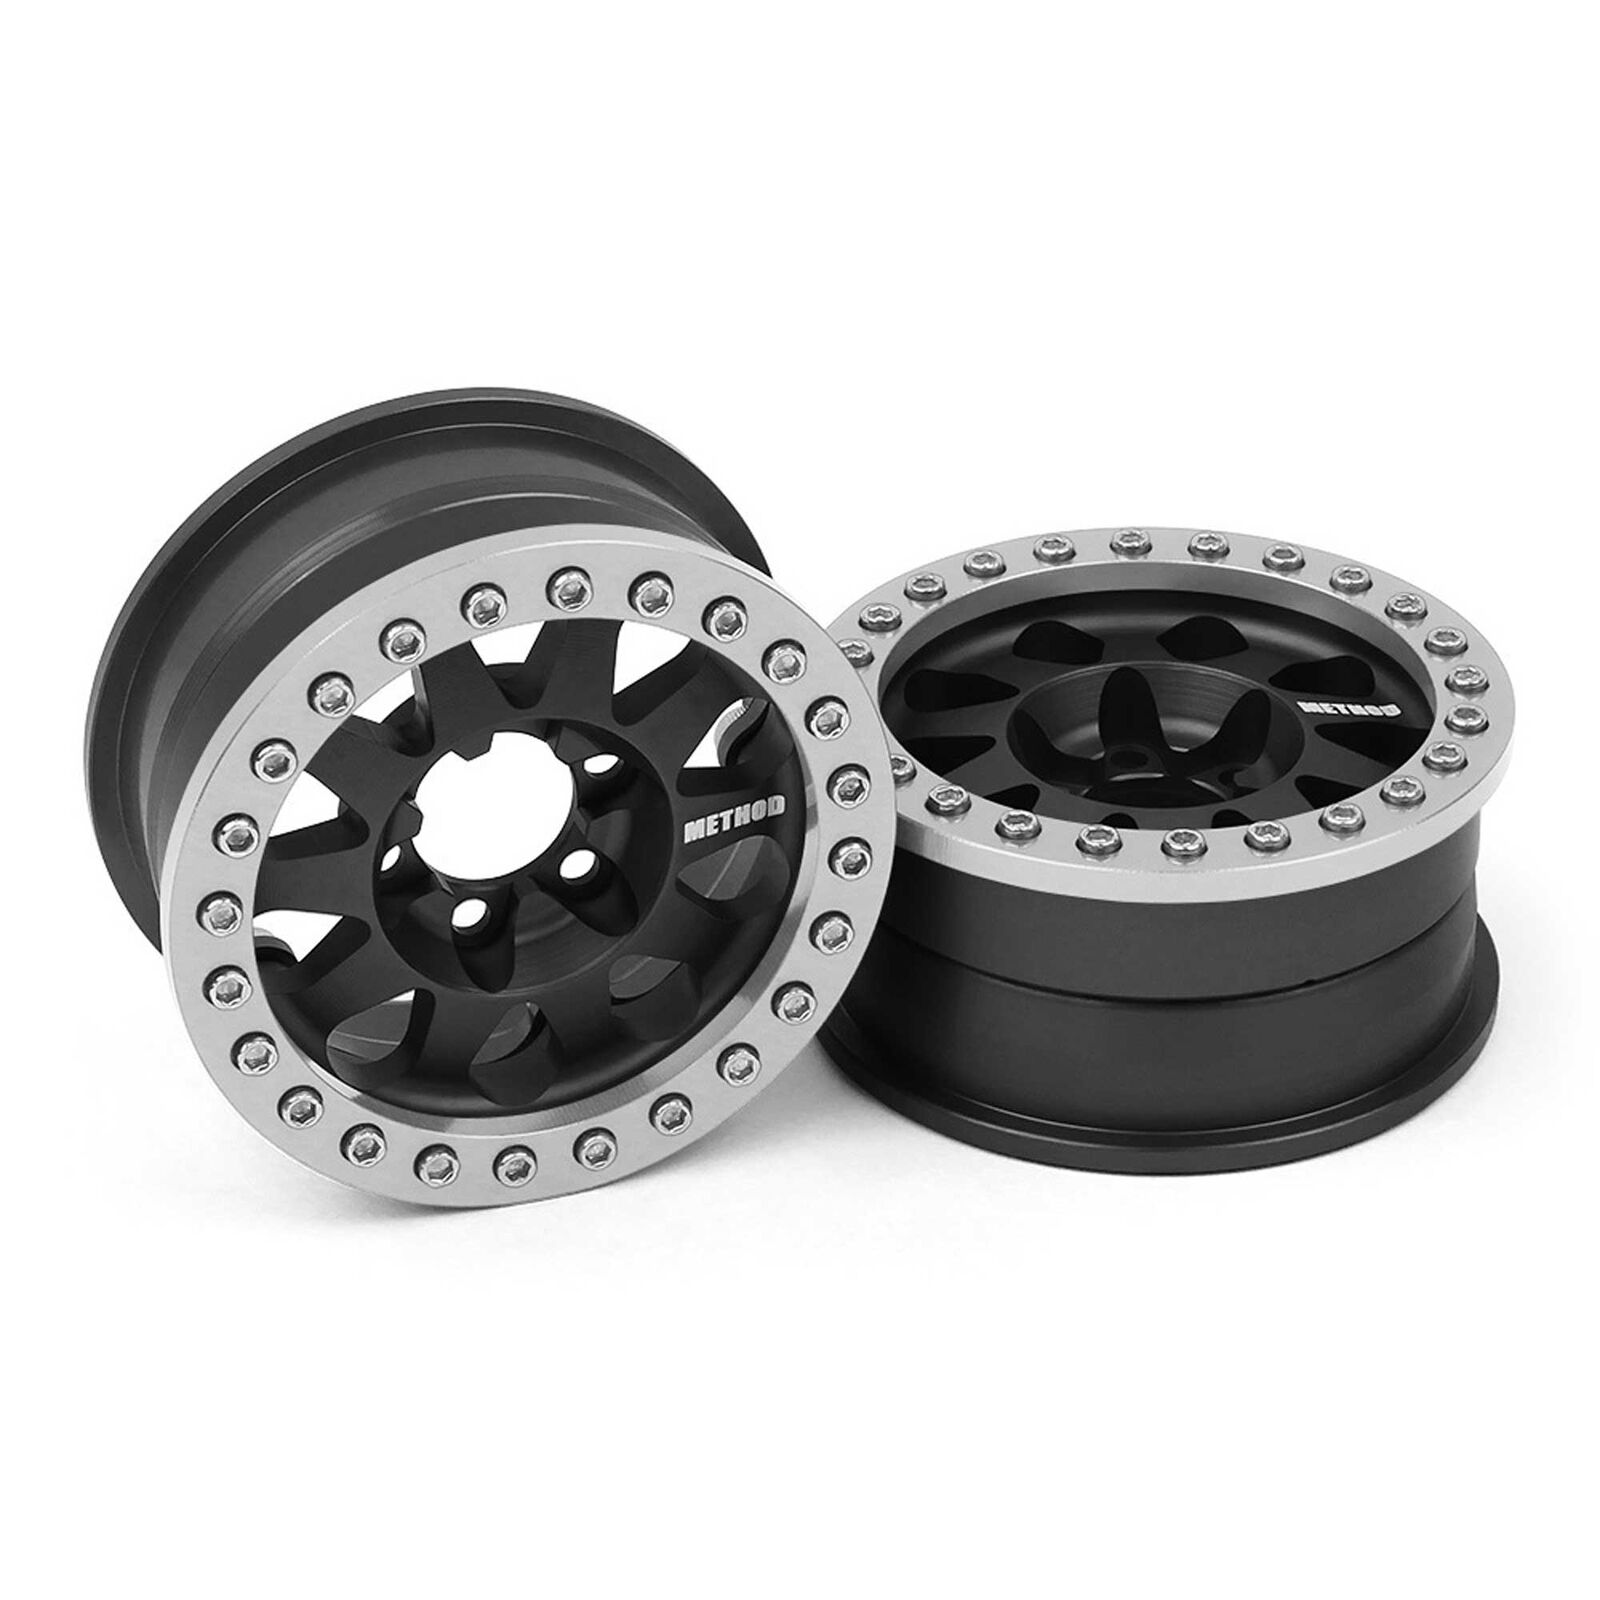 1/10 Method 101 V2 1.9 Race Crawler Wheels, 12mm Hex, Black Anodized (2)